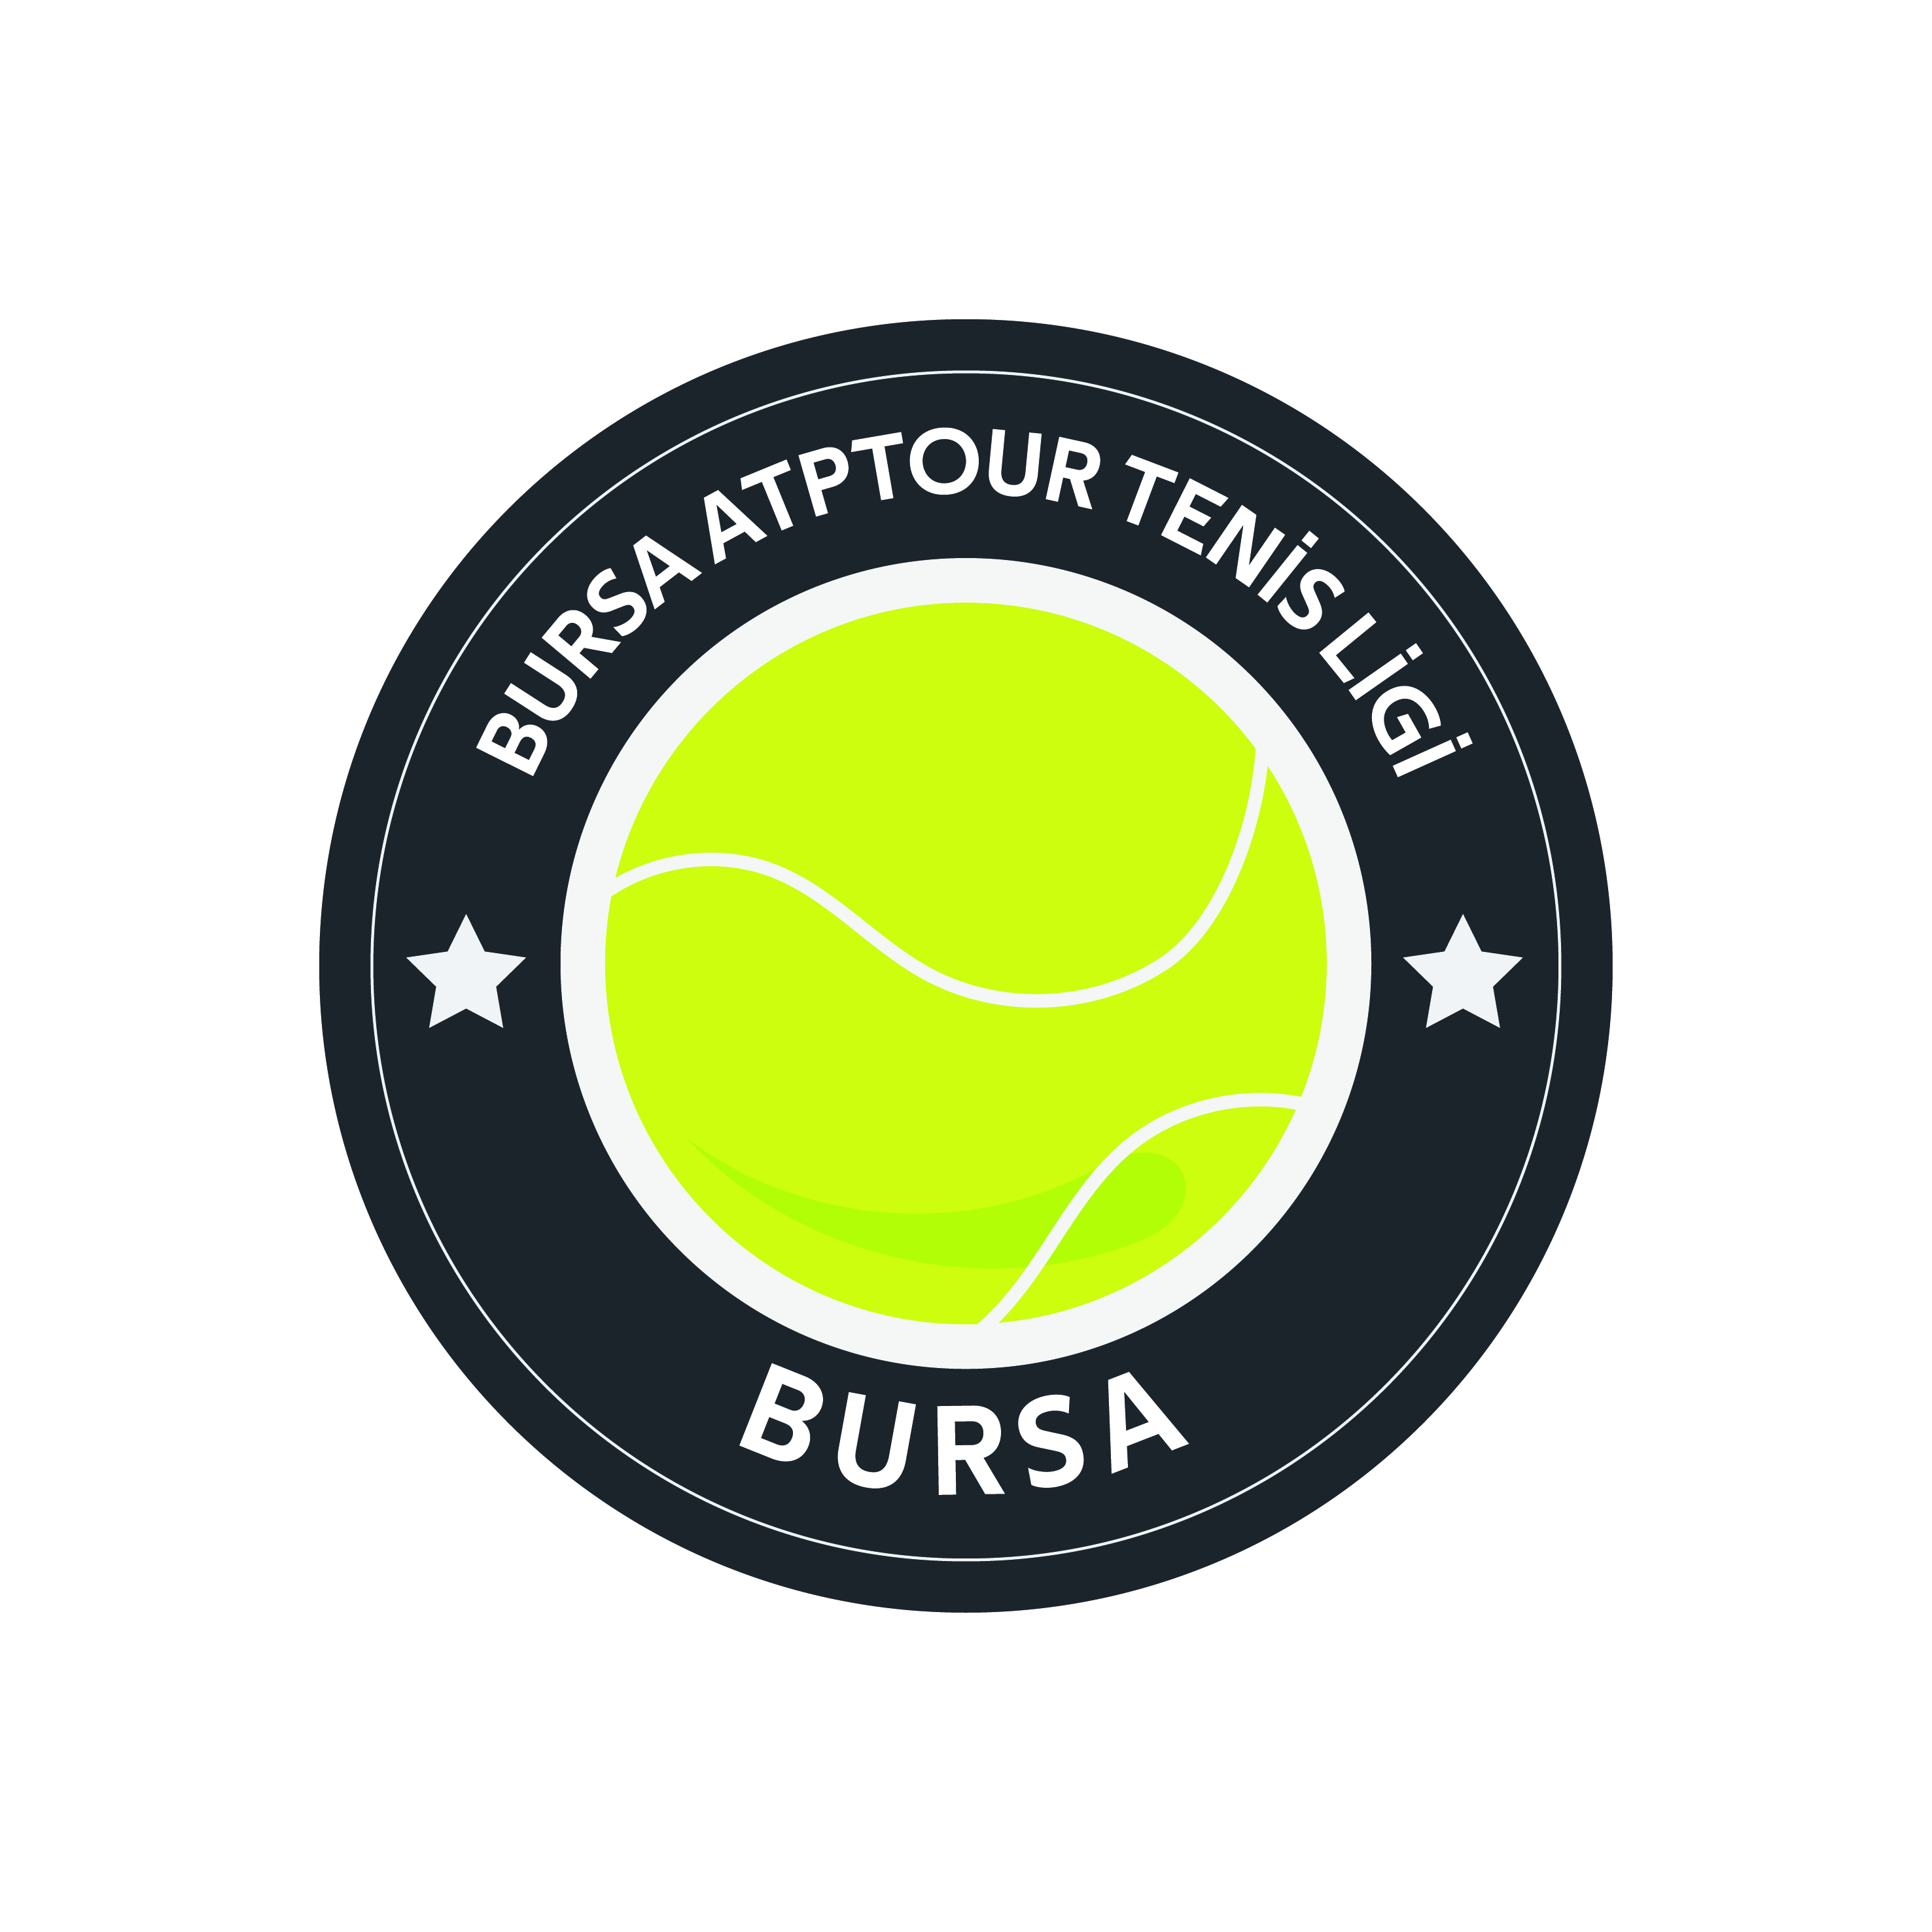 BURSA ATPTOUR Tenis Ligi